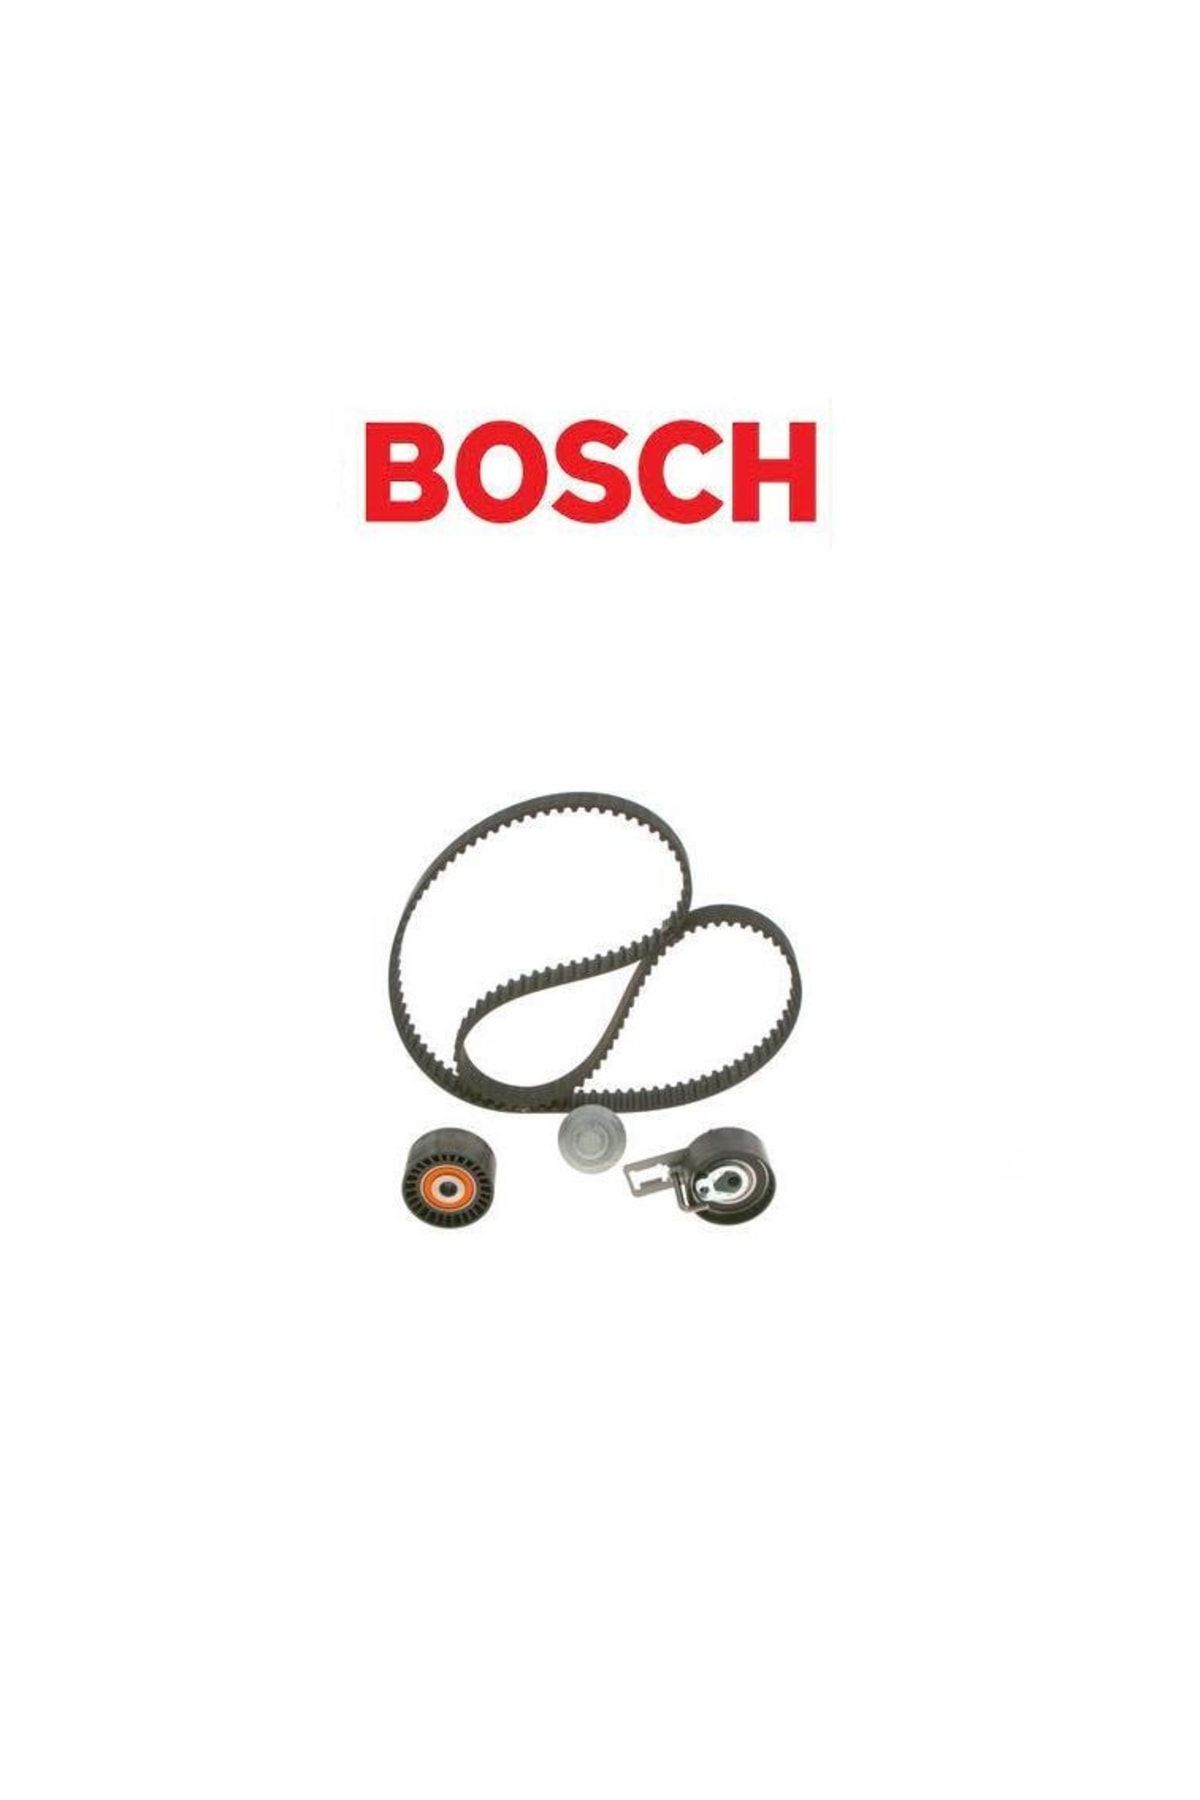 Bosch Triger Set Berlingo 2 C3 C4 Fiesta 6 Focus 3 207 208 308 3001 0831q1 1987948991